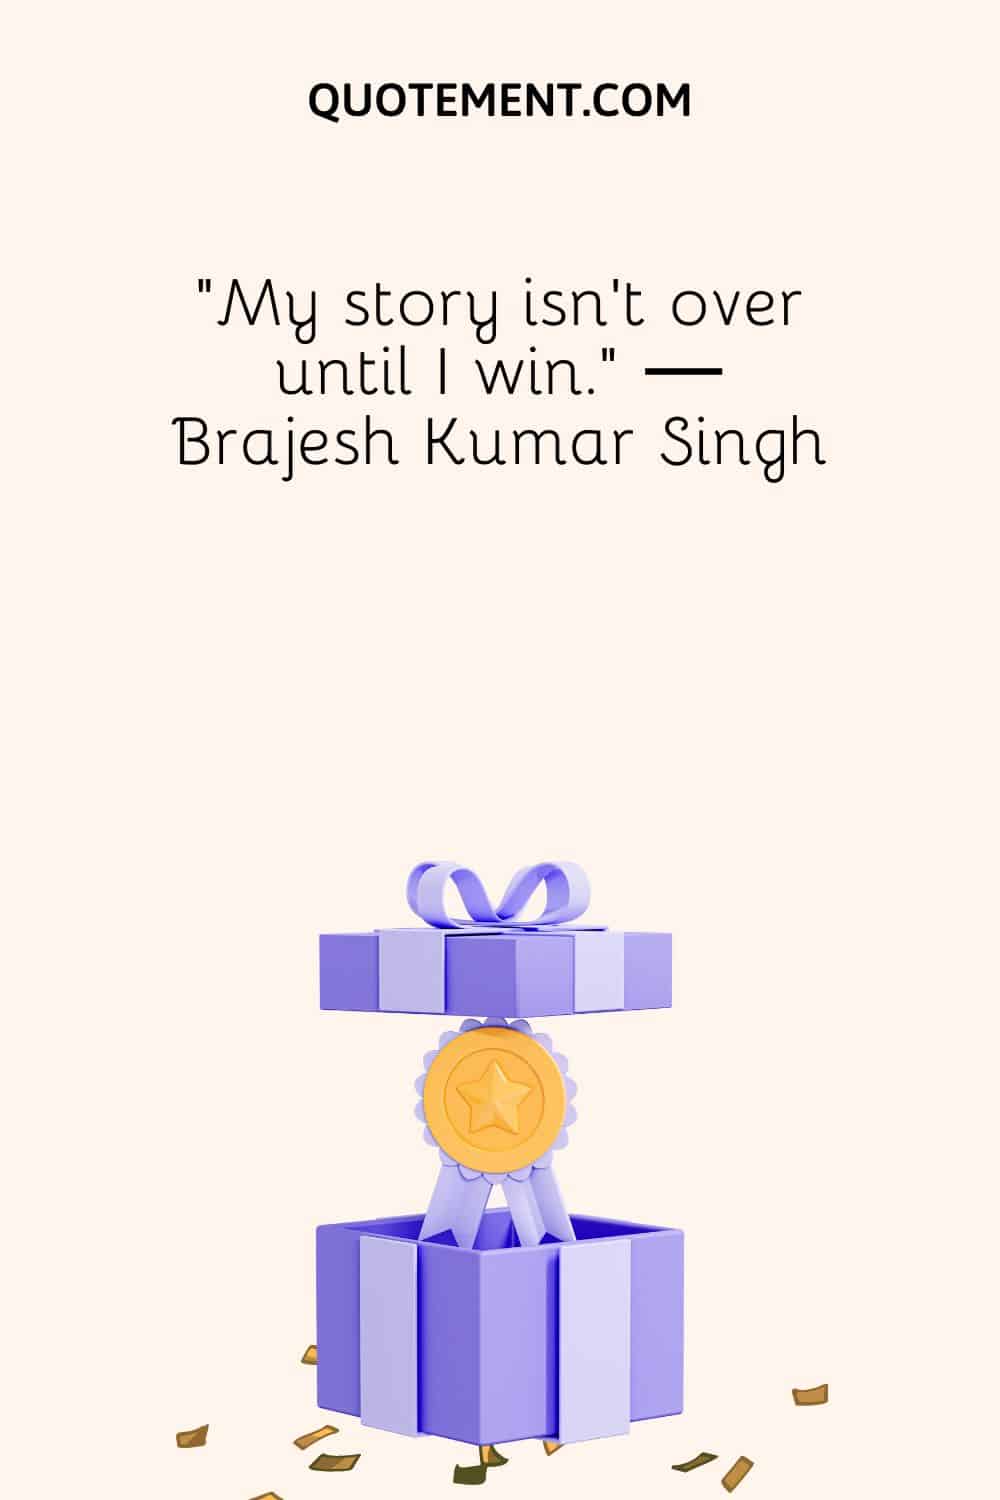 “My story isn't over until I win.” ― Brajesh Kumar Singh